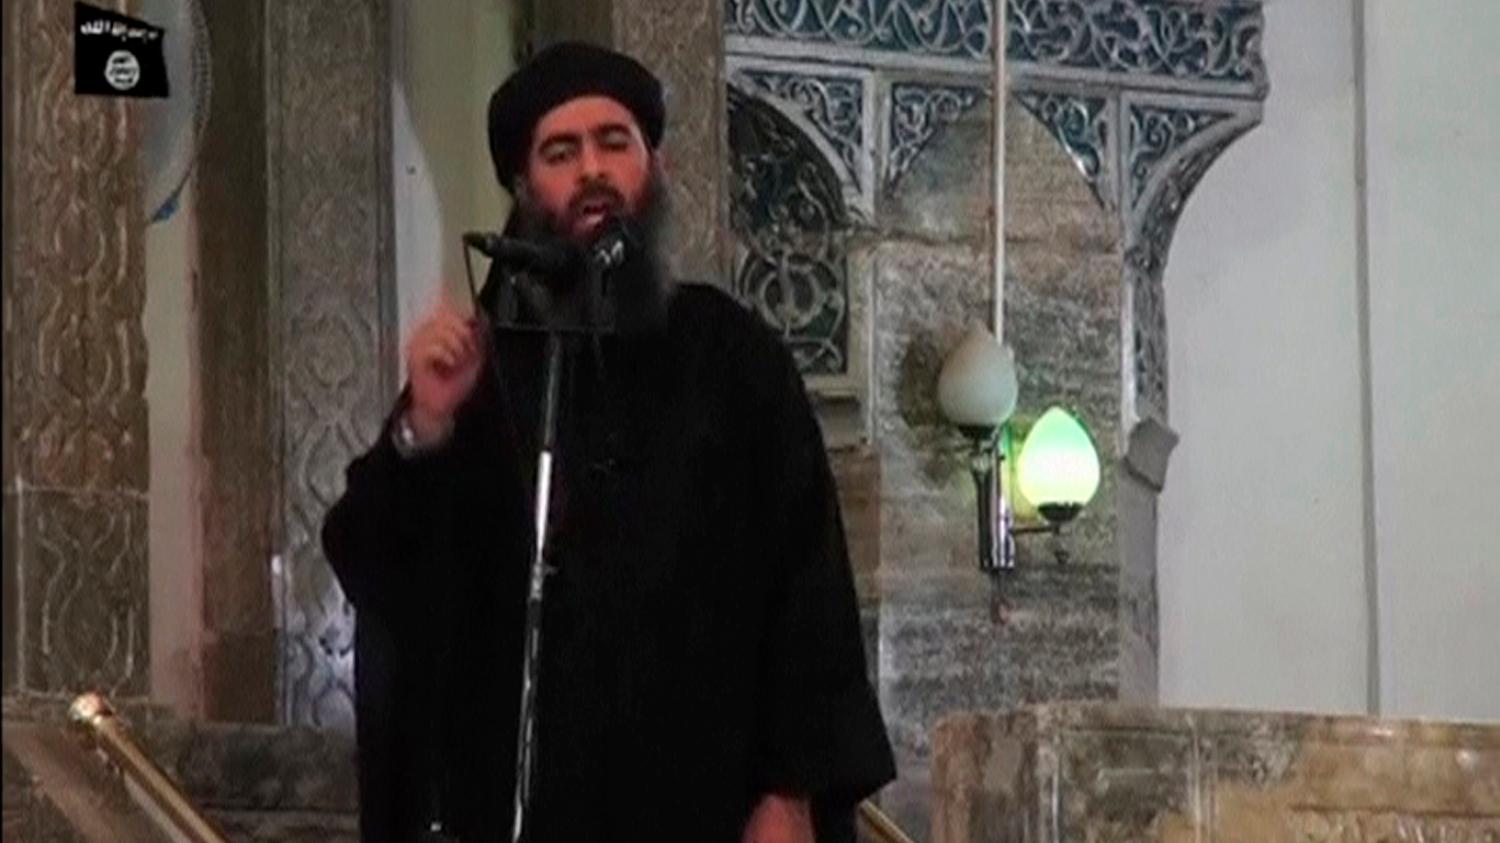 Abu Bakr al-Baghdadi, the leader of ISIS